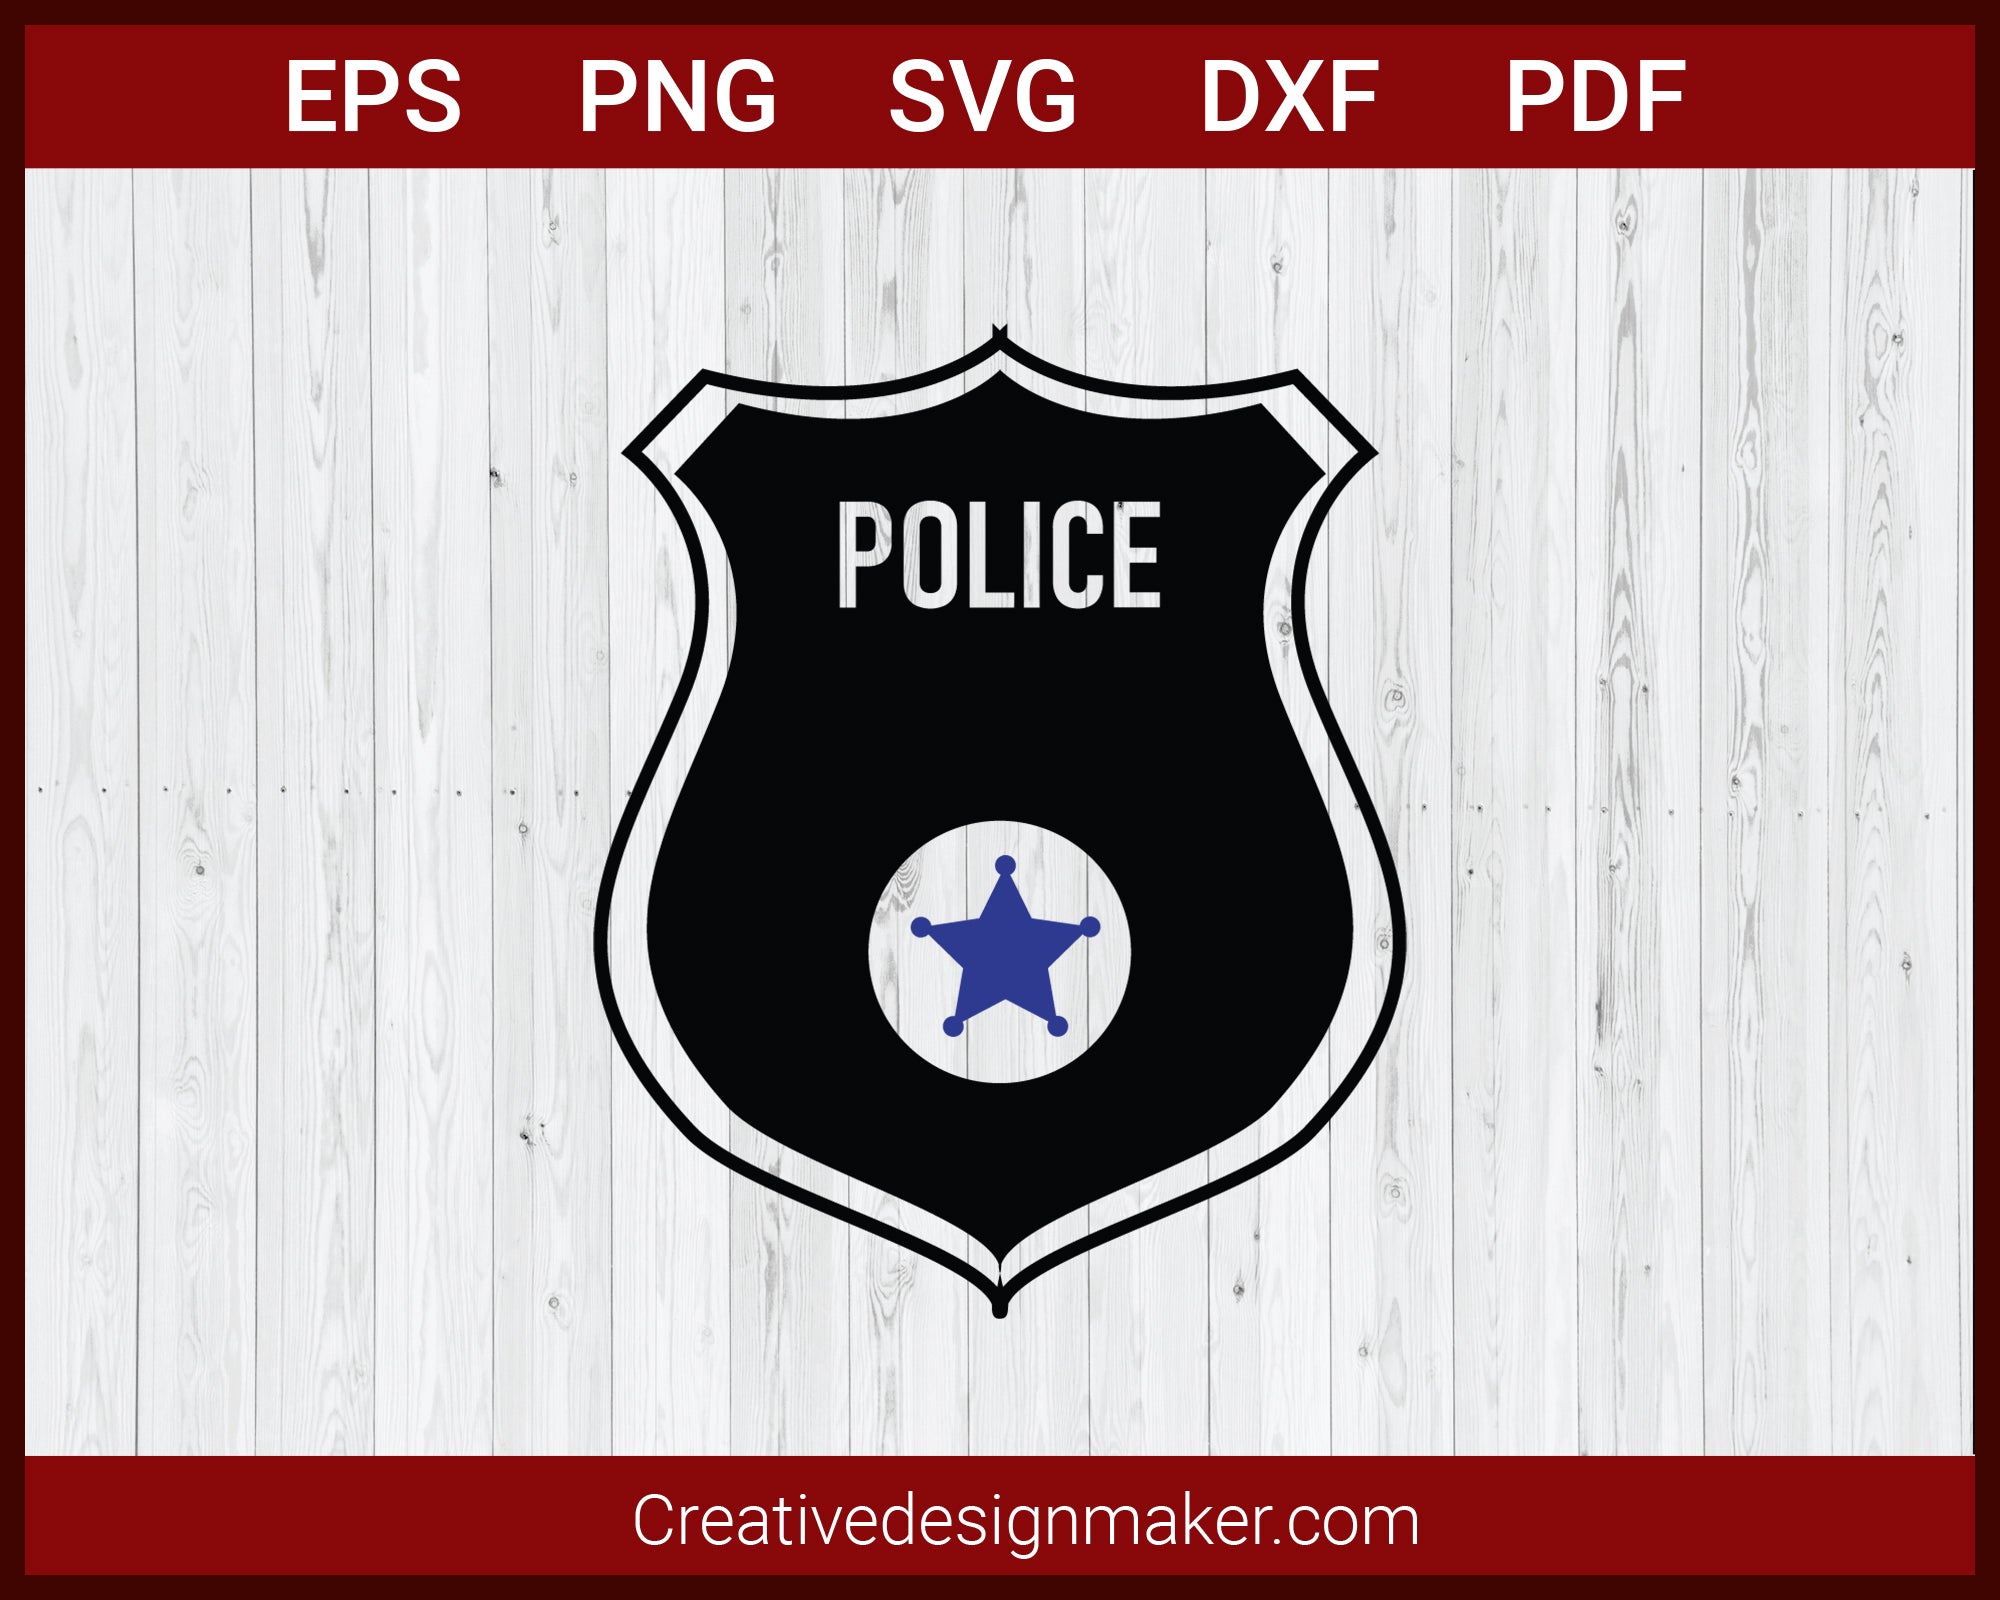 blue shield badge